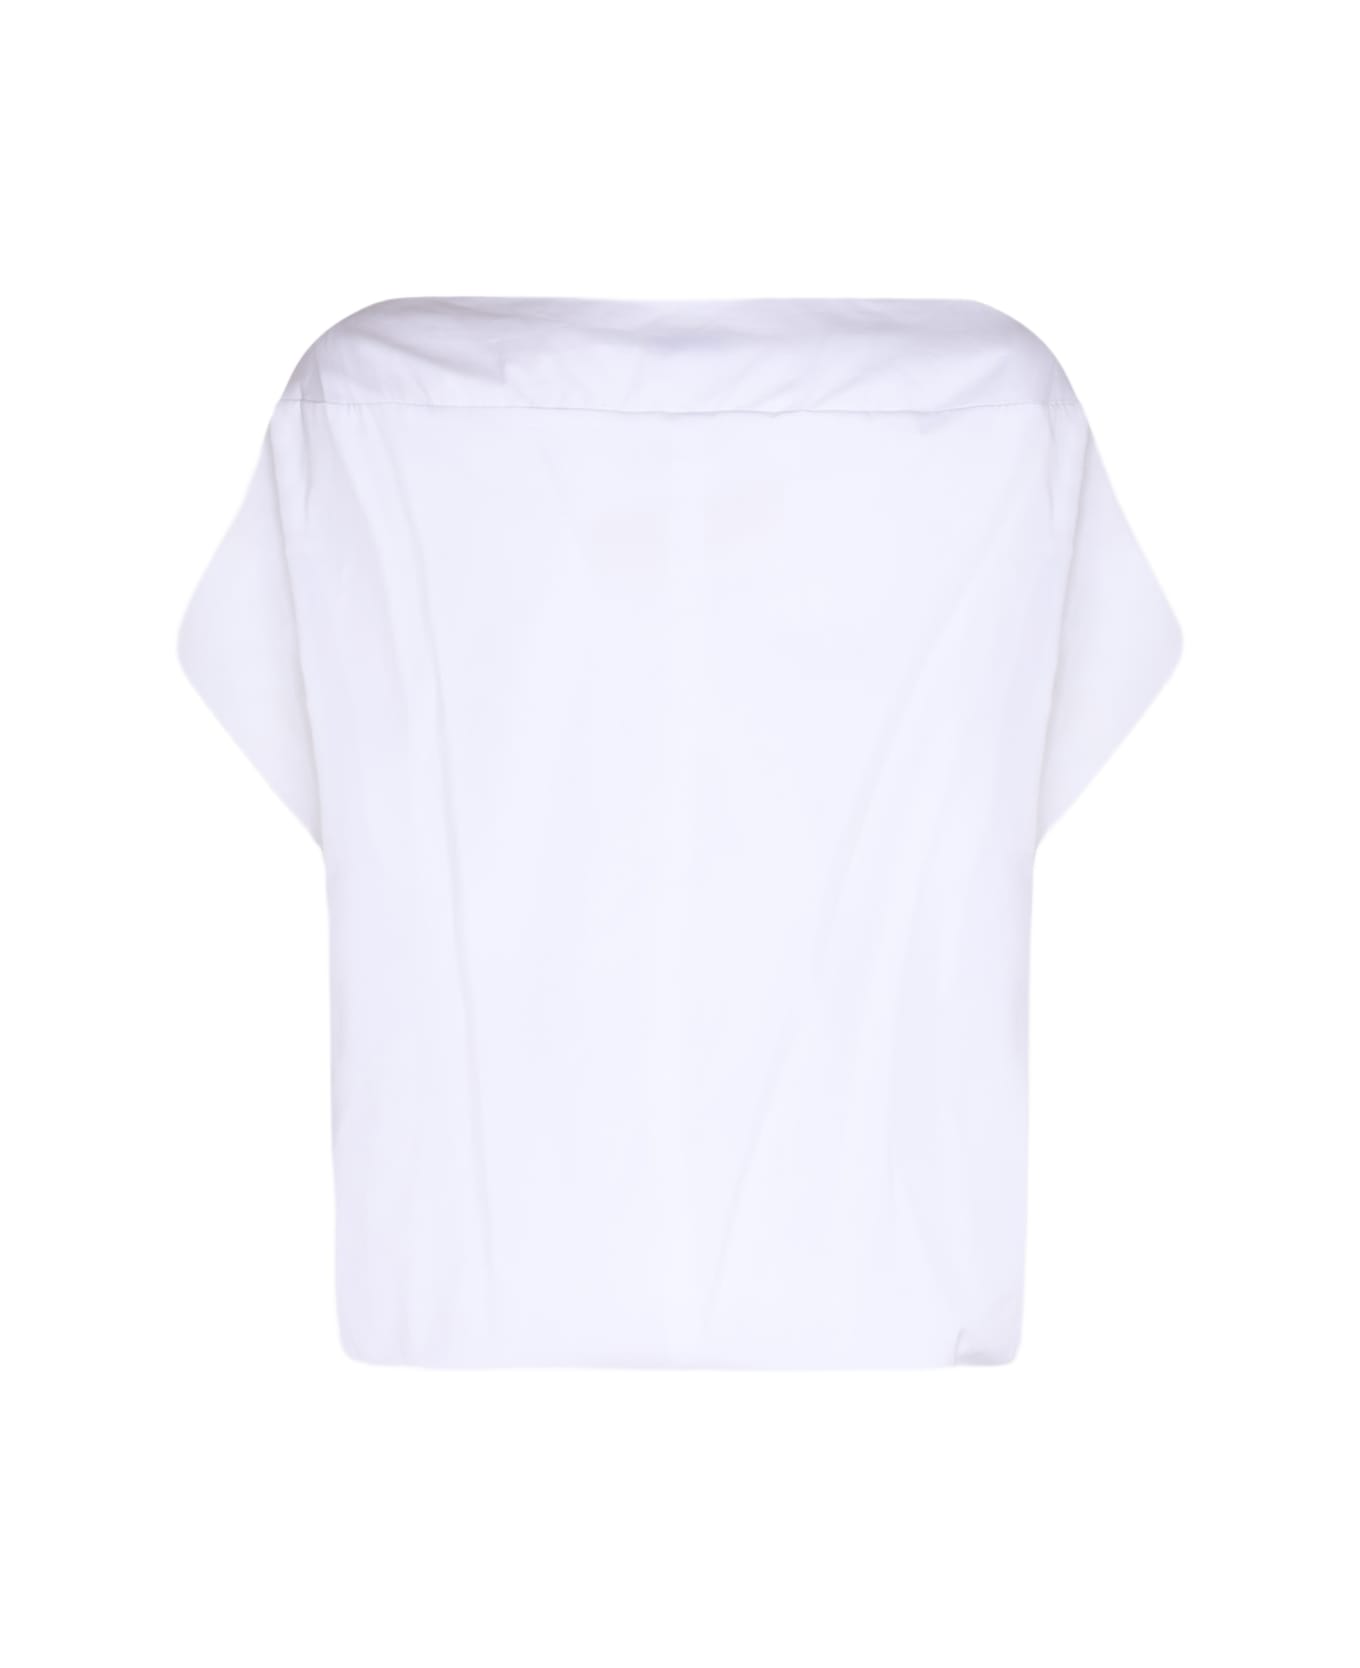 Dries Van Noten White Cotton Shirt - White シャツ